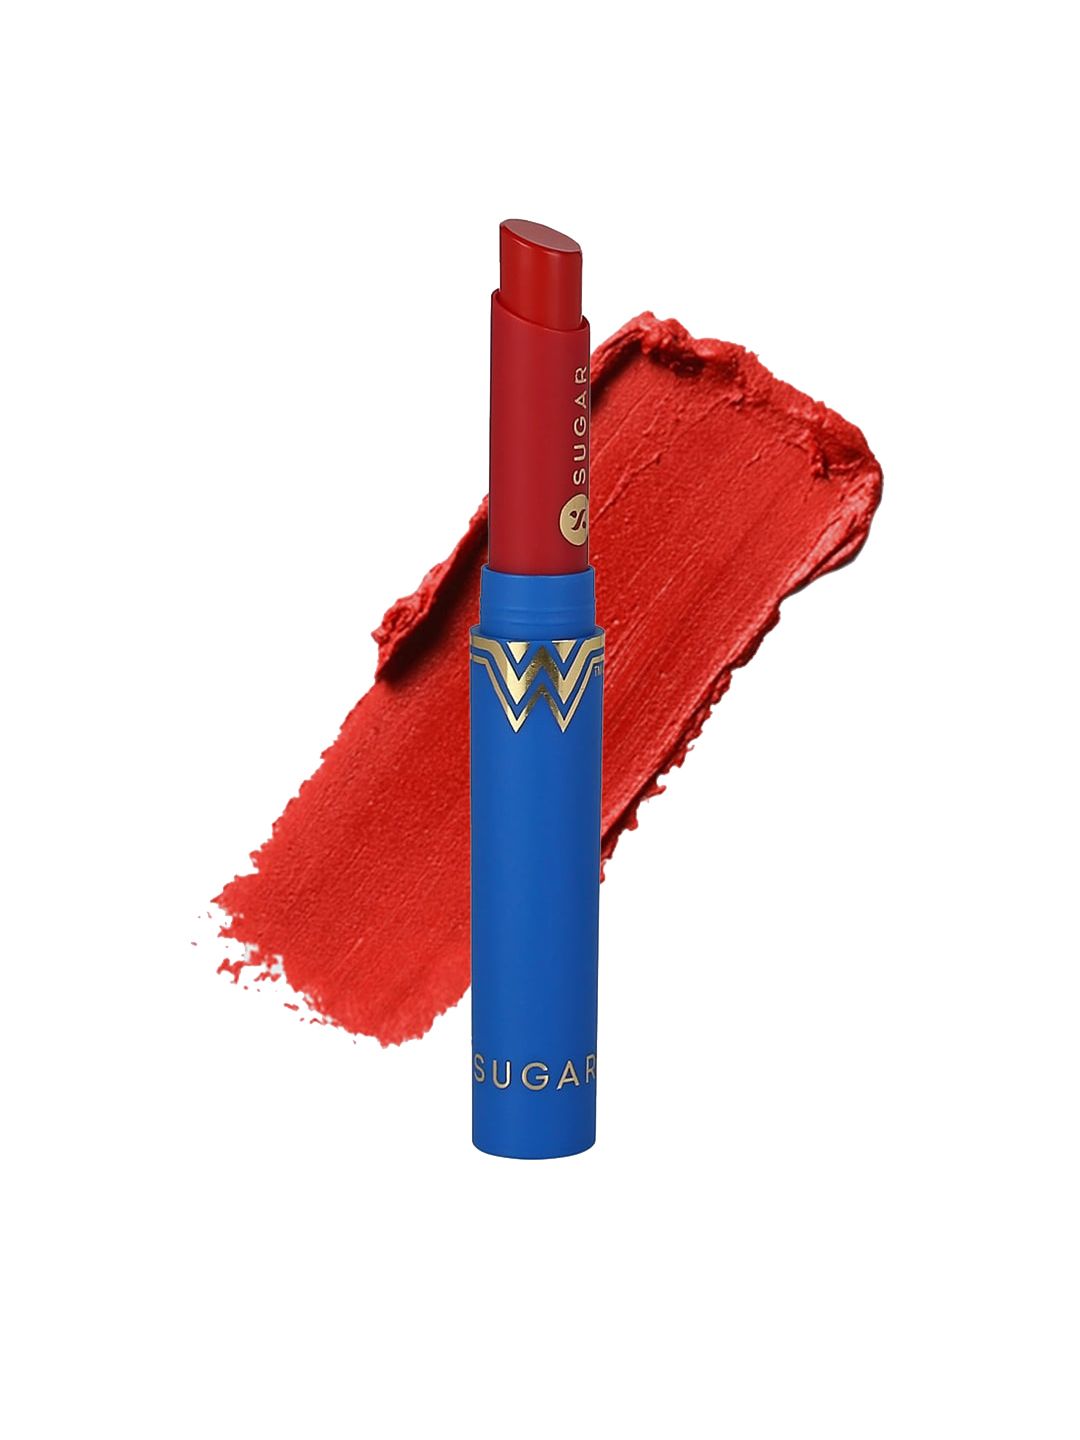 SUGAR X Wonder Woman Creamy Matte Lipstick - Lasso Keeper 09 Price in India